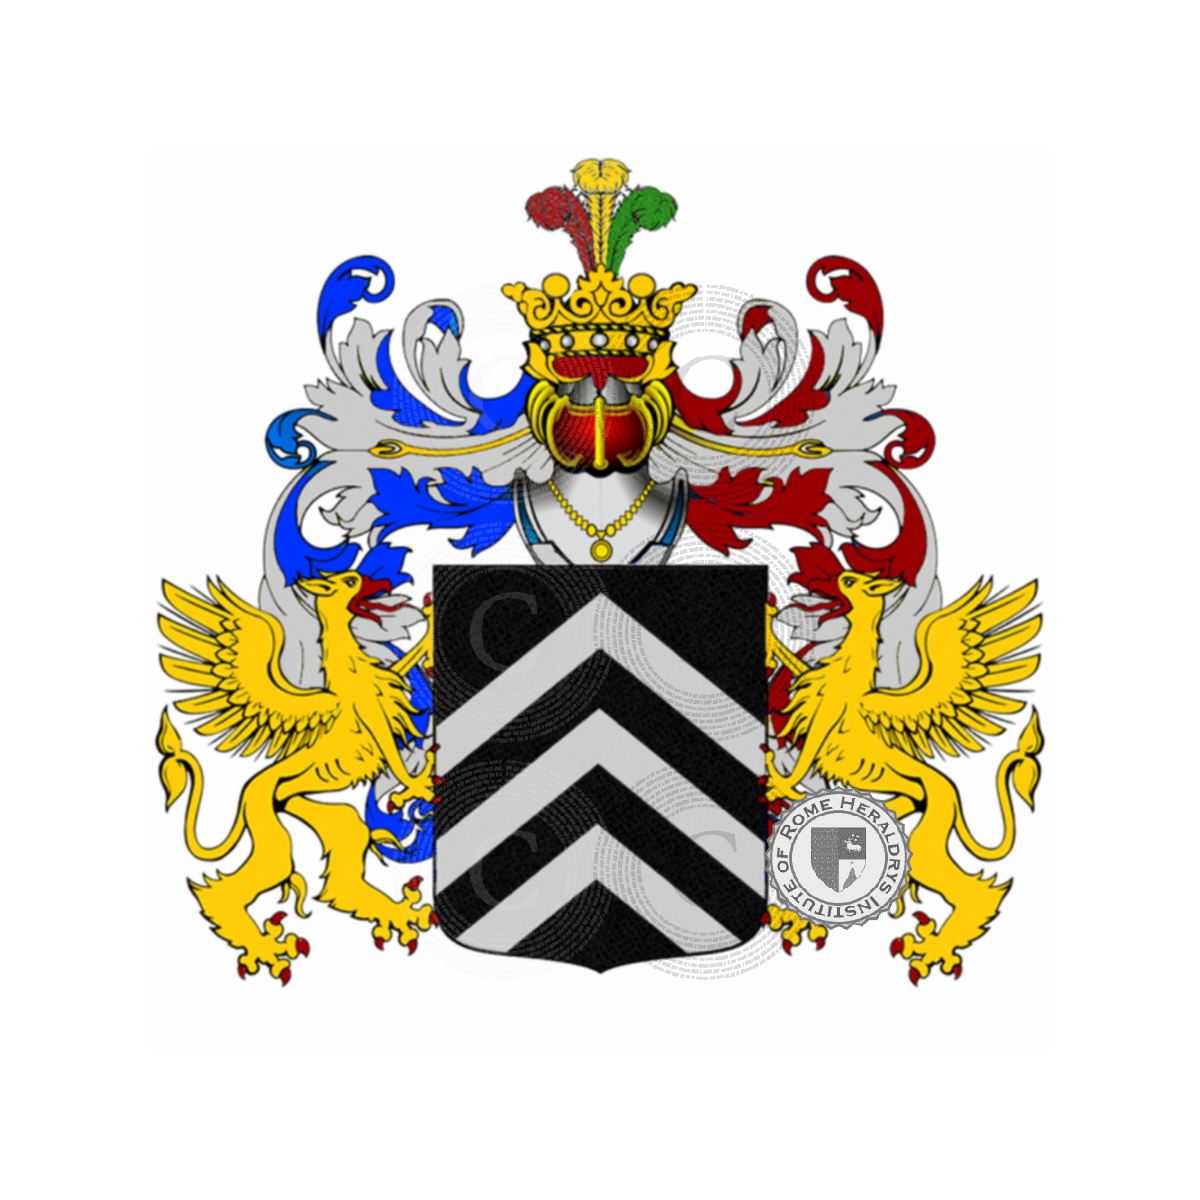 Coat of arms of familytaddei cascia